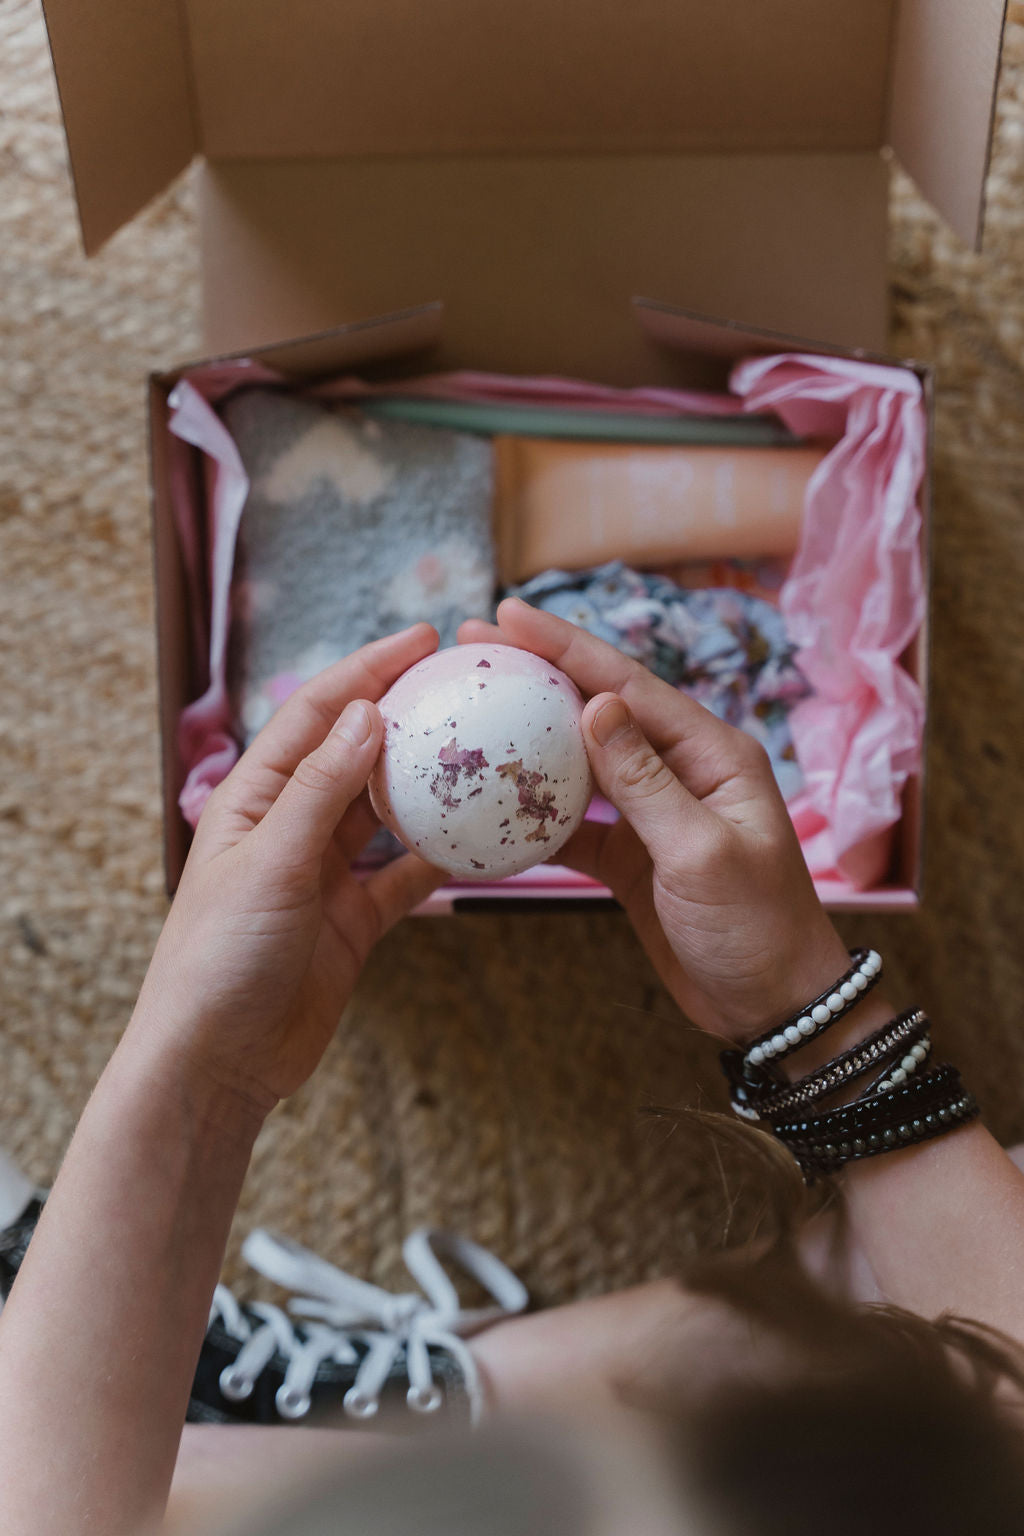 LWK Tween Self-care box, Bath bomb surprise necklace, rose petal, rose scent